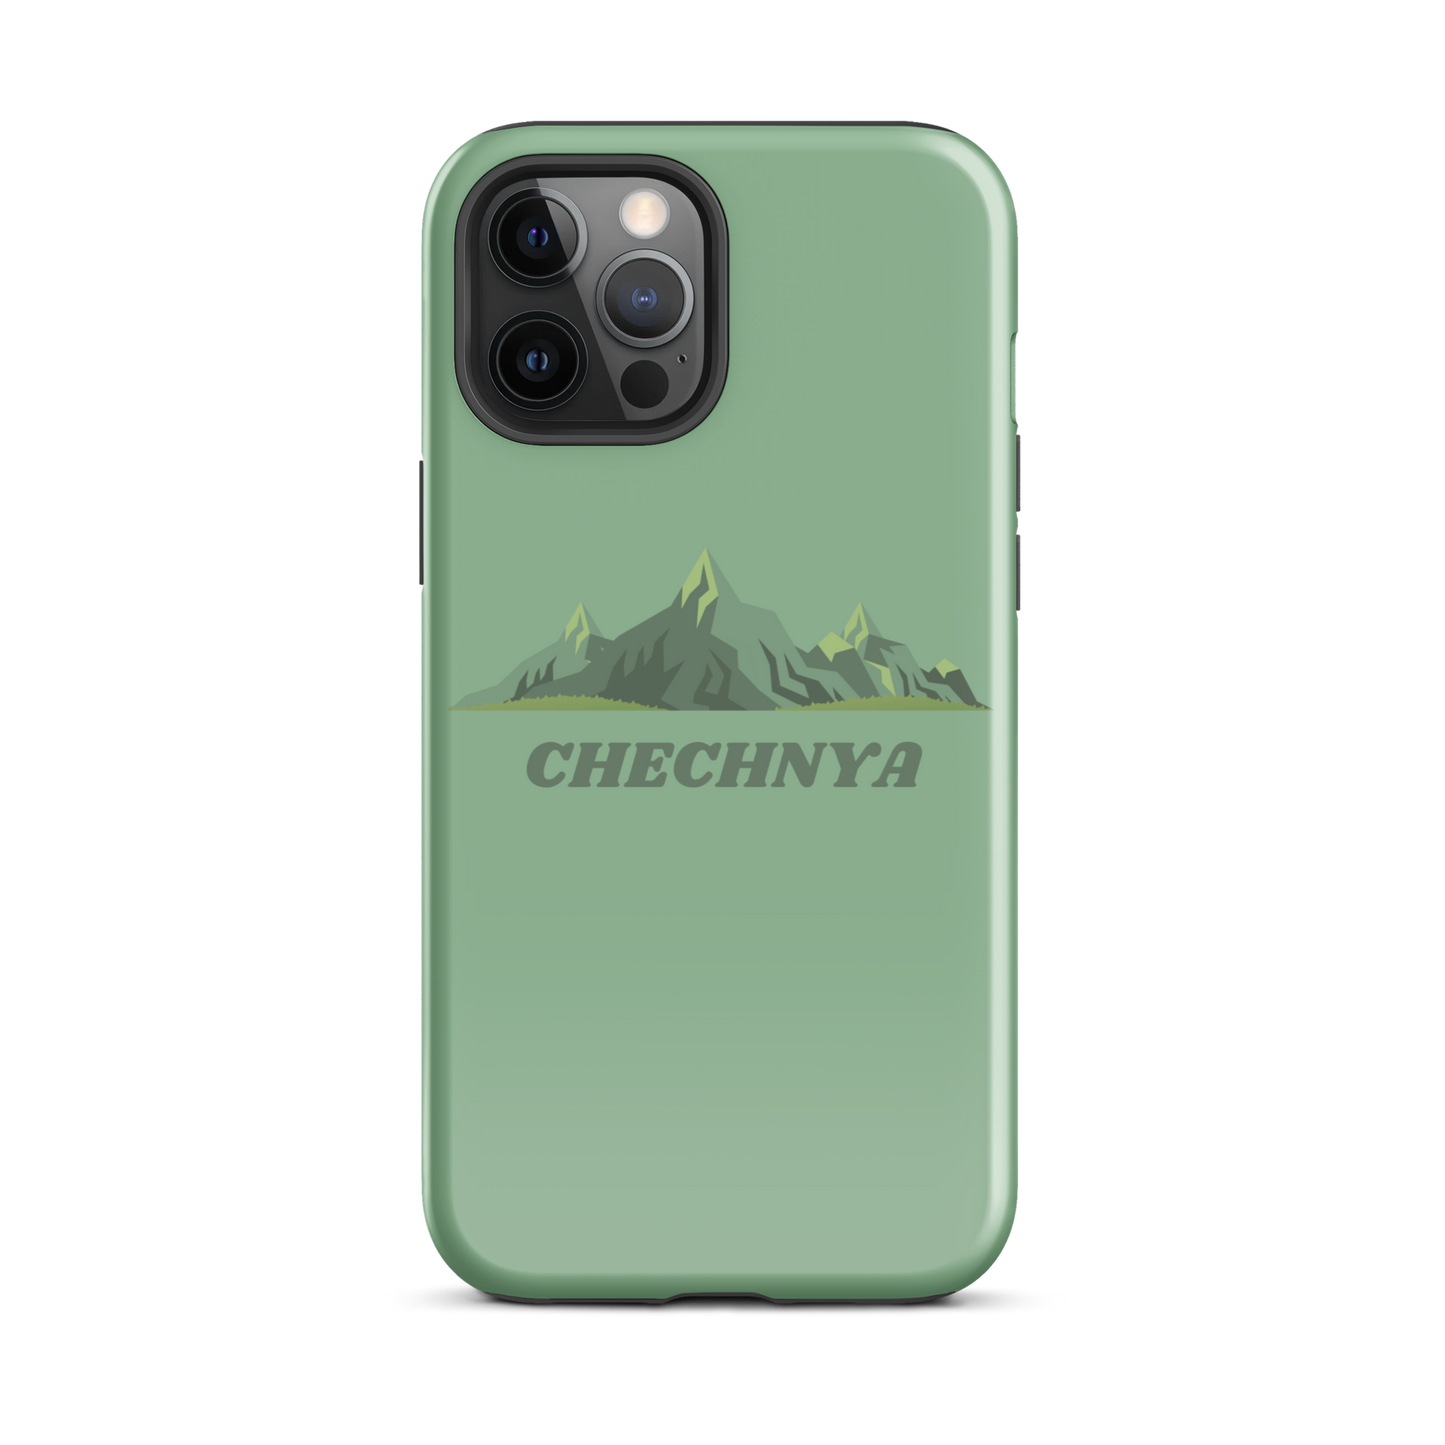 CHECHNYA - Light Green